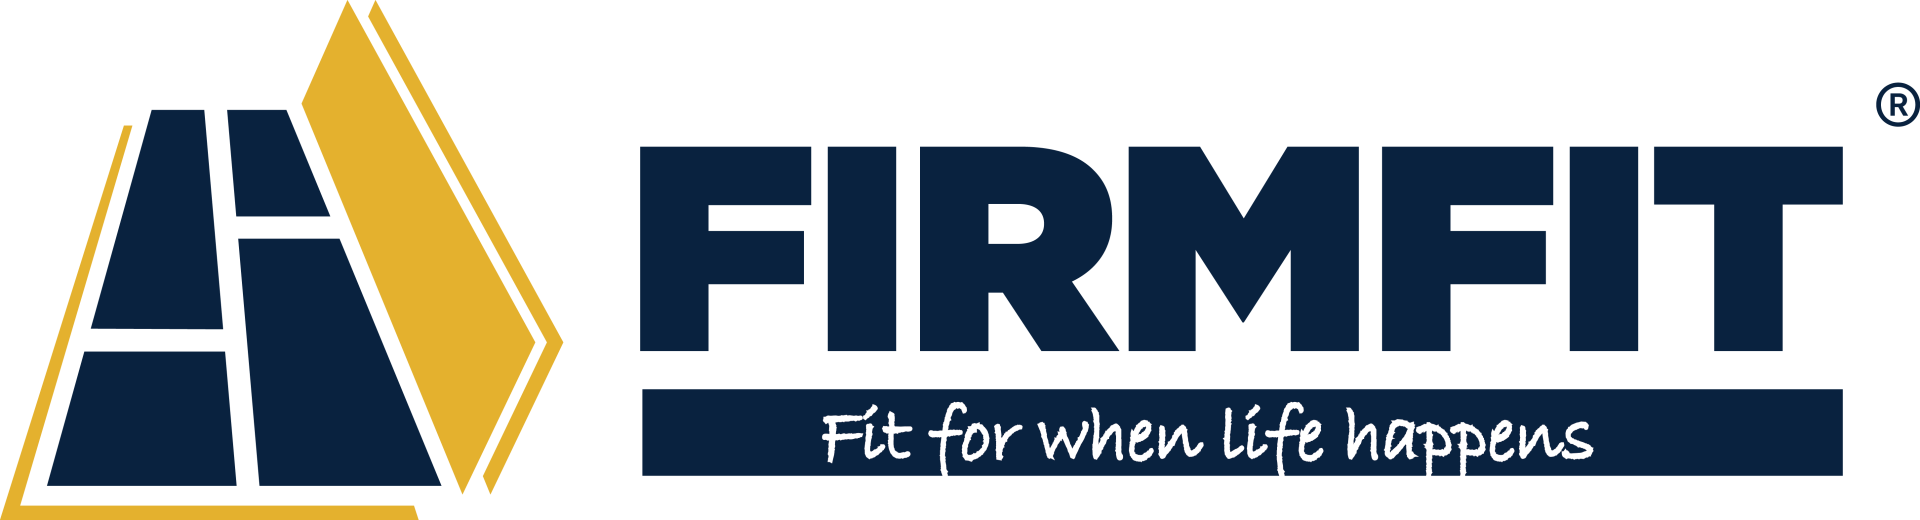 FIRMFIT логотип. FIRMFIT Tiles. FIRMFIT виниловая плитка лого. Ламинат логотип.